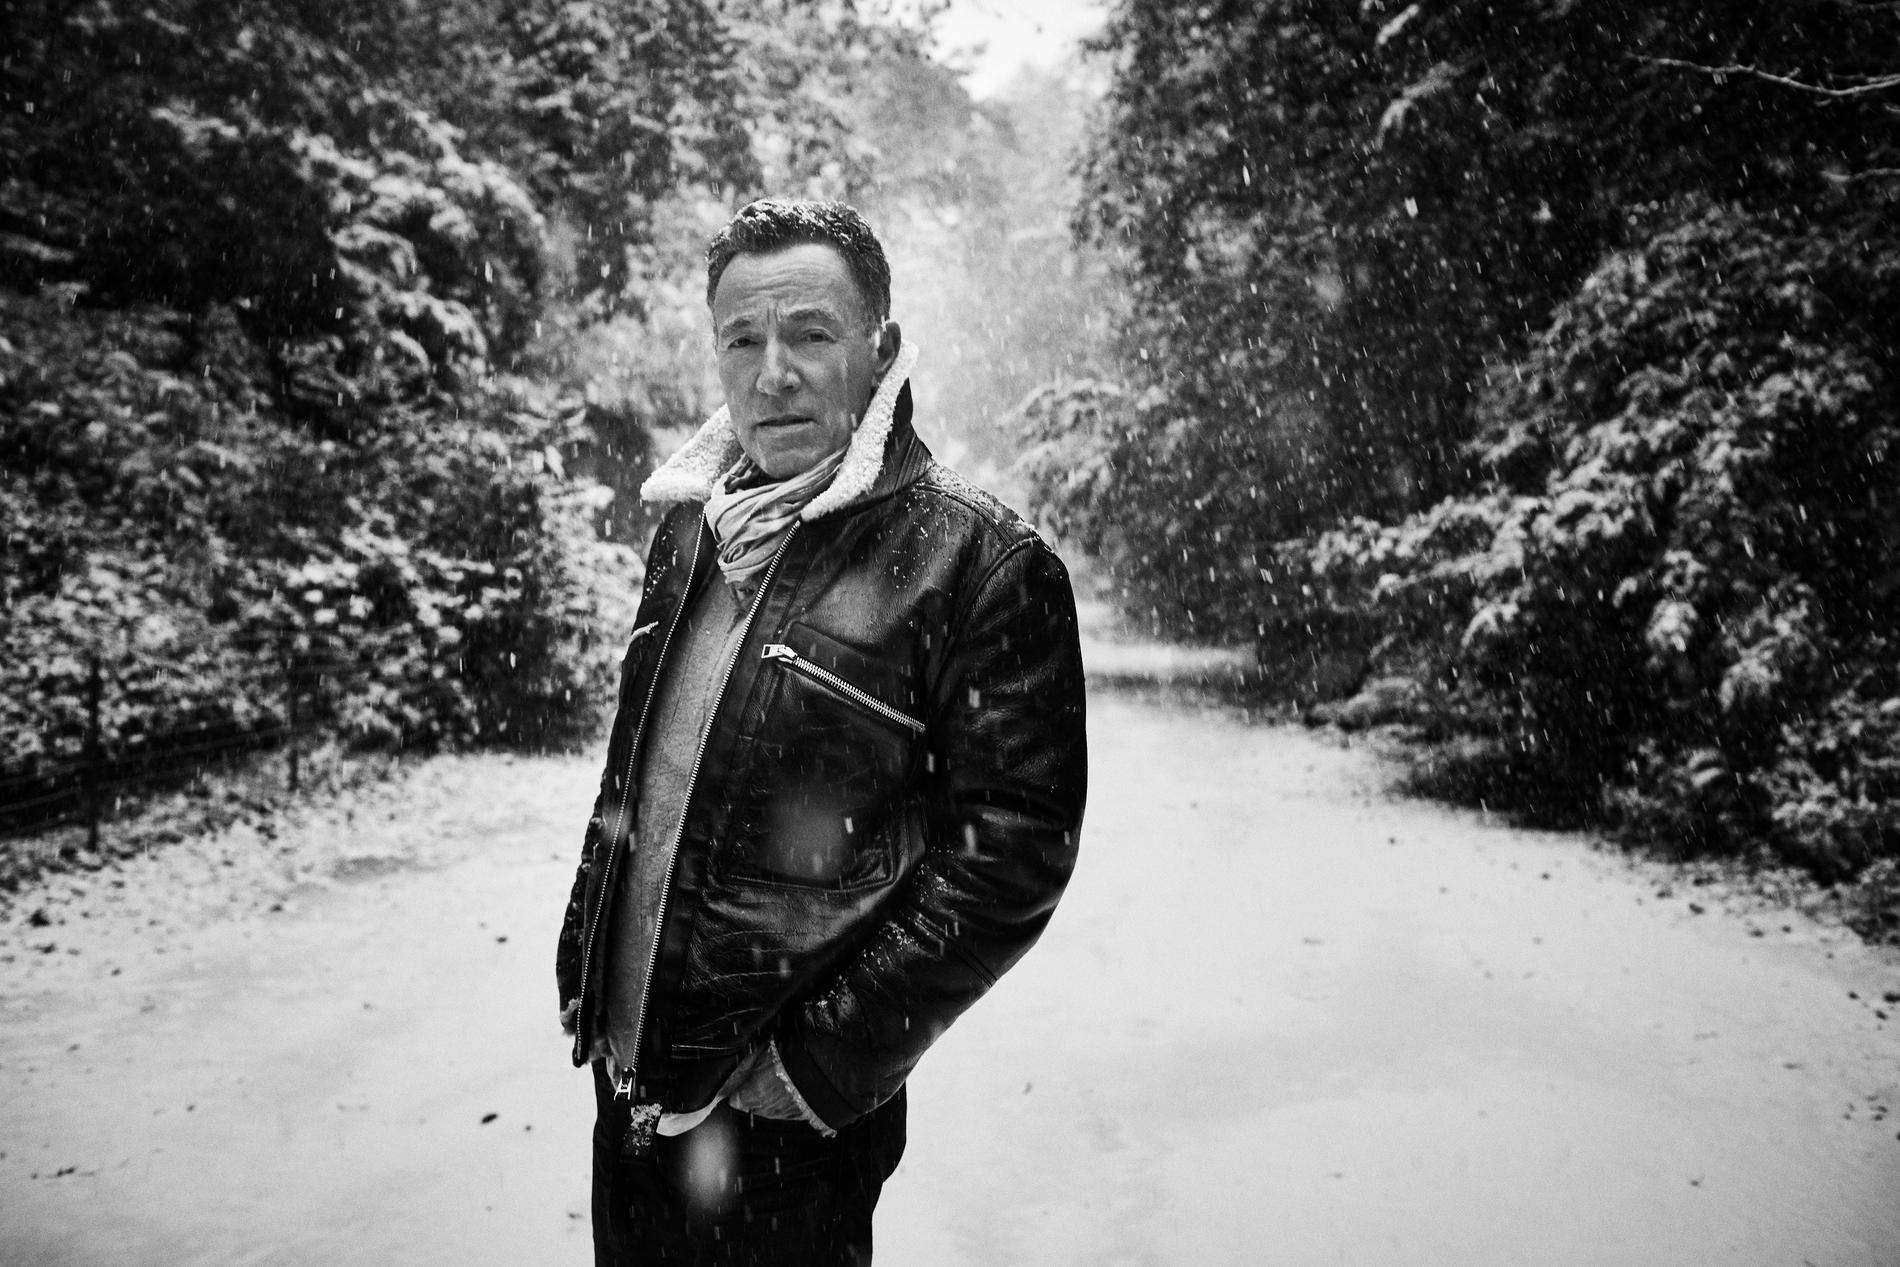 Bruce Springsteen släpper sitt nya album "Letter to you" den 23 oktober tillsammans med The E Street Band. Pressbild.